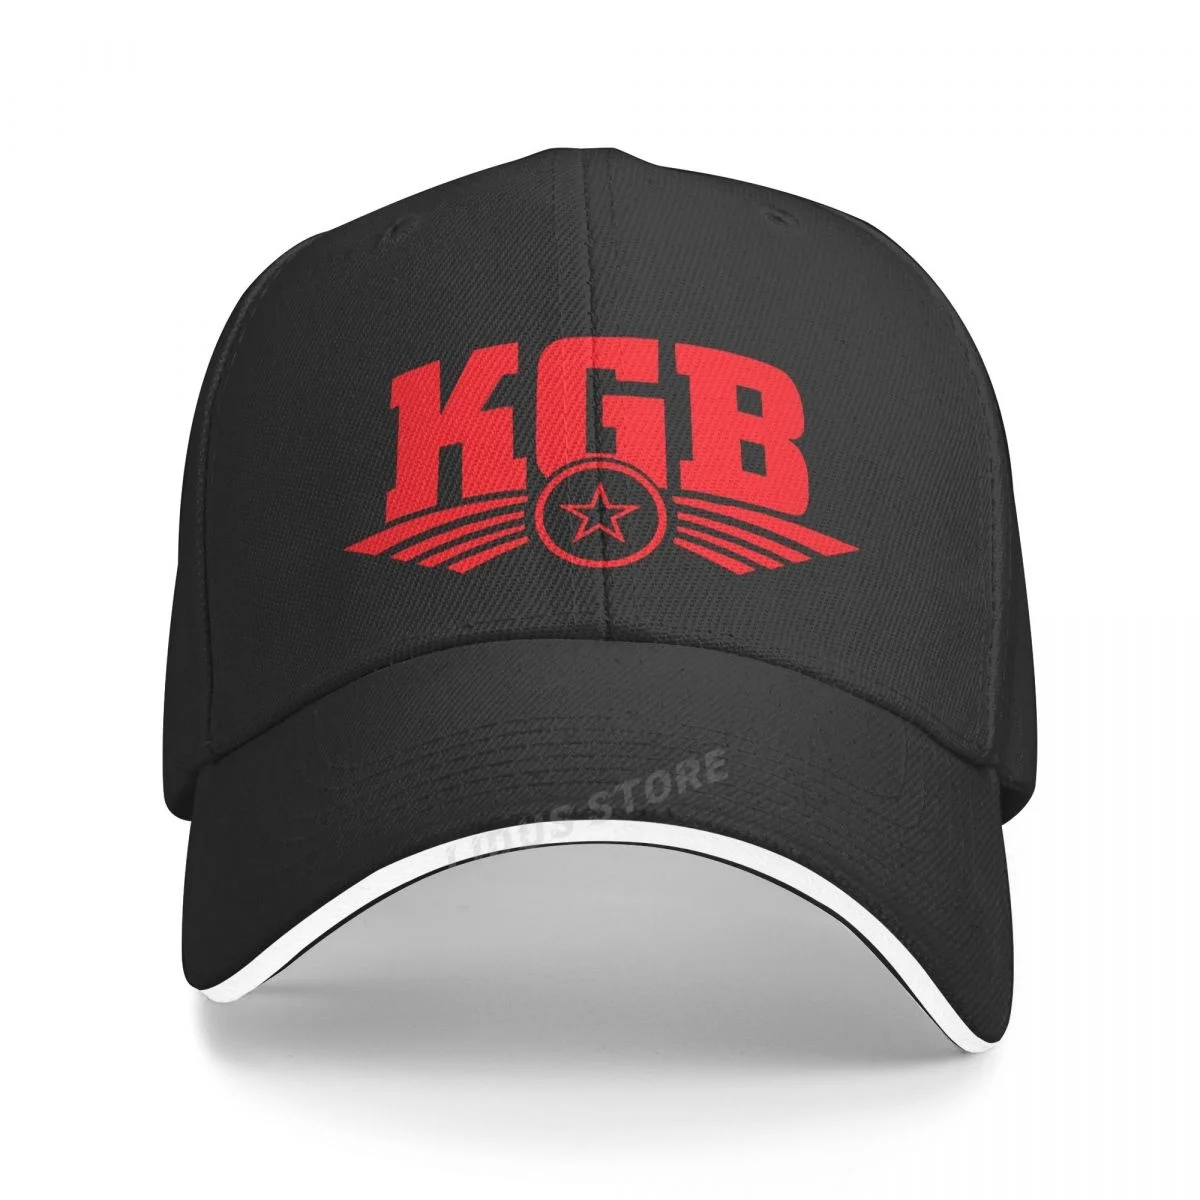 New USSR KGB Baseball Cap Fashion Cool Unisex KGB Russia Hat Man Outdoor Caps